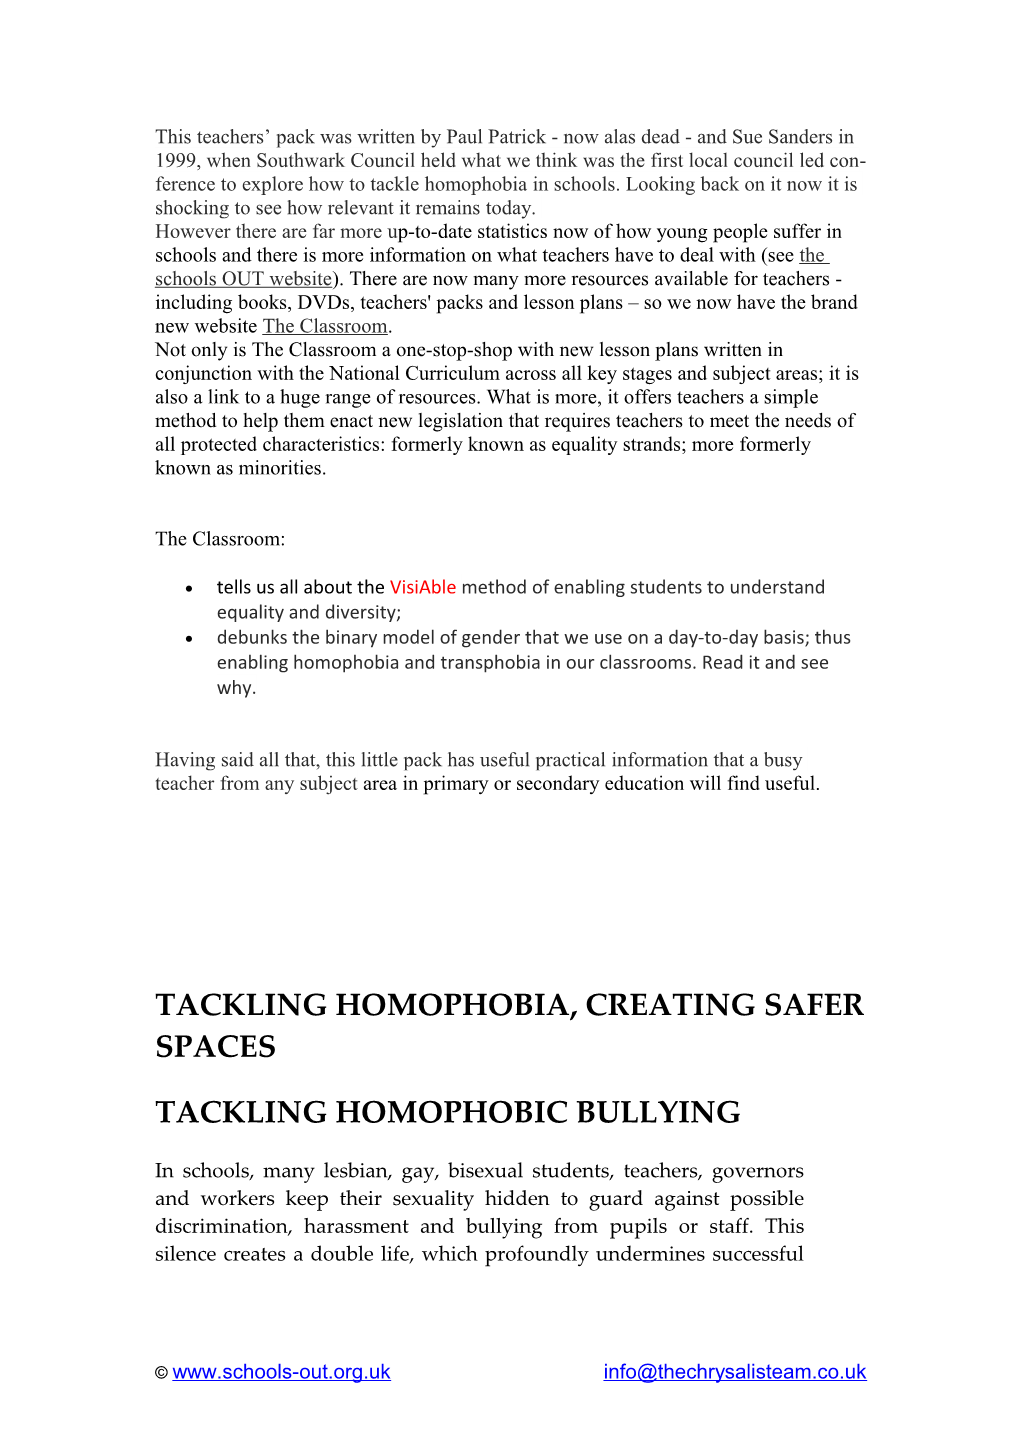 Tackling Homophobic Bullying